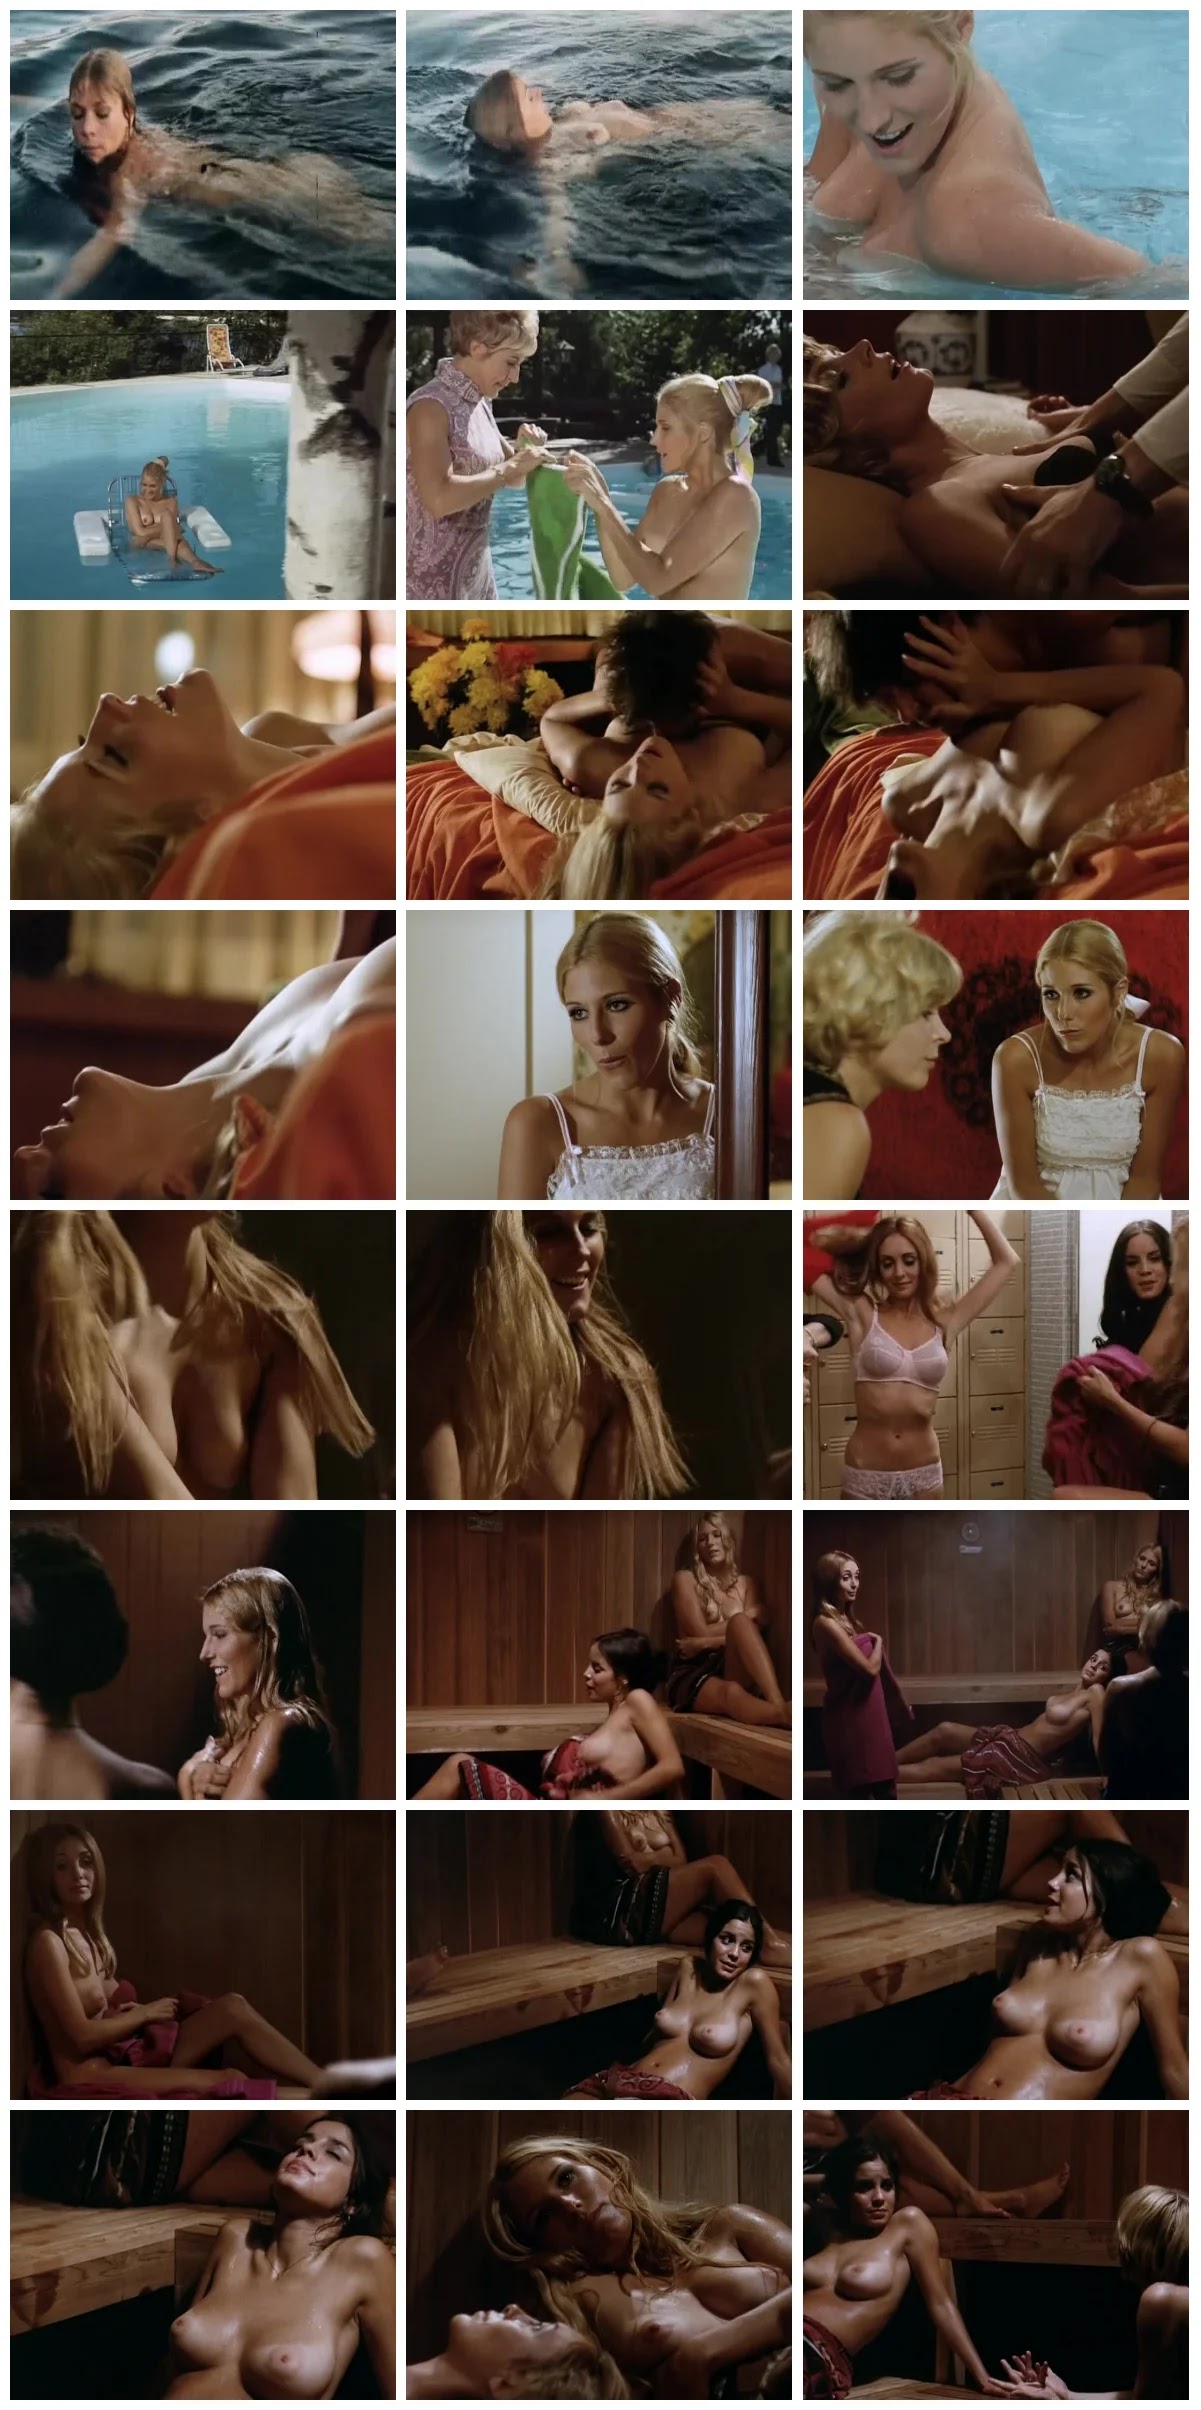 Linitiation (1970) EroGarga Watch Free Vintage Porn Movies, Retro Sex Videos, Mobile Porn